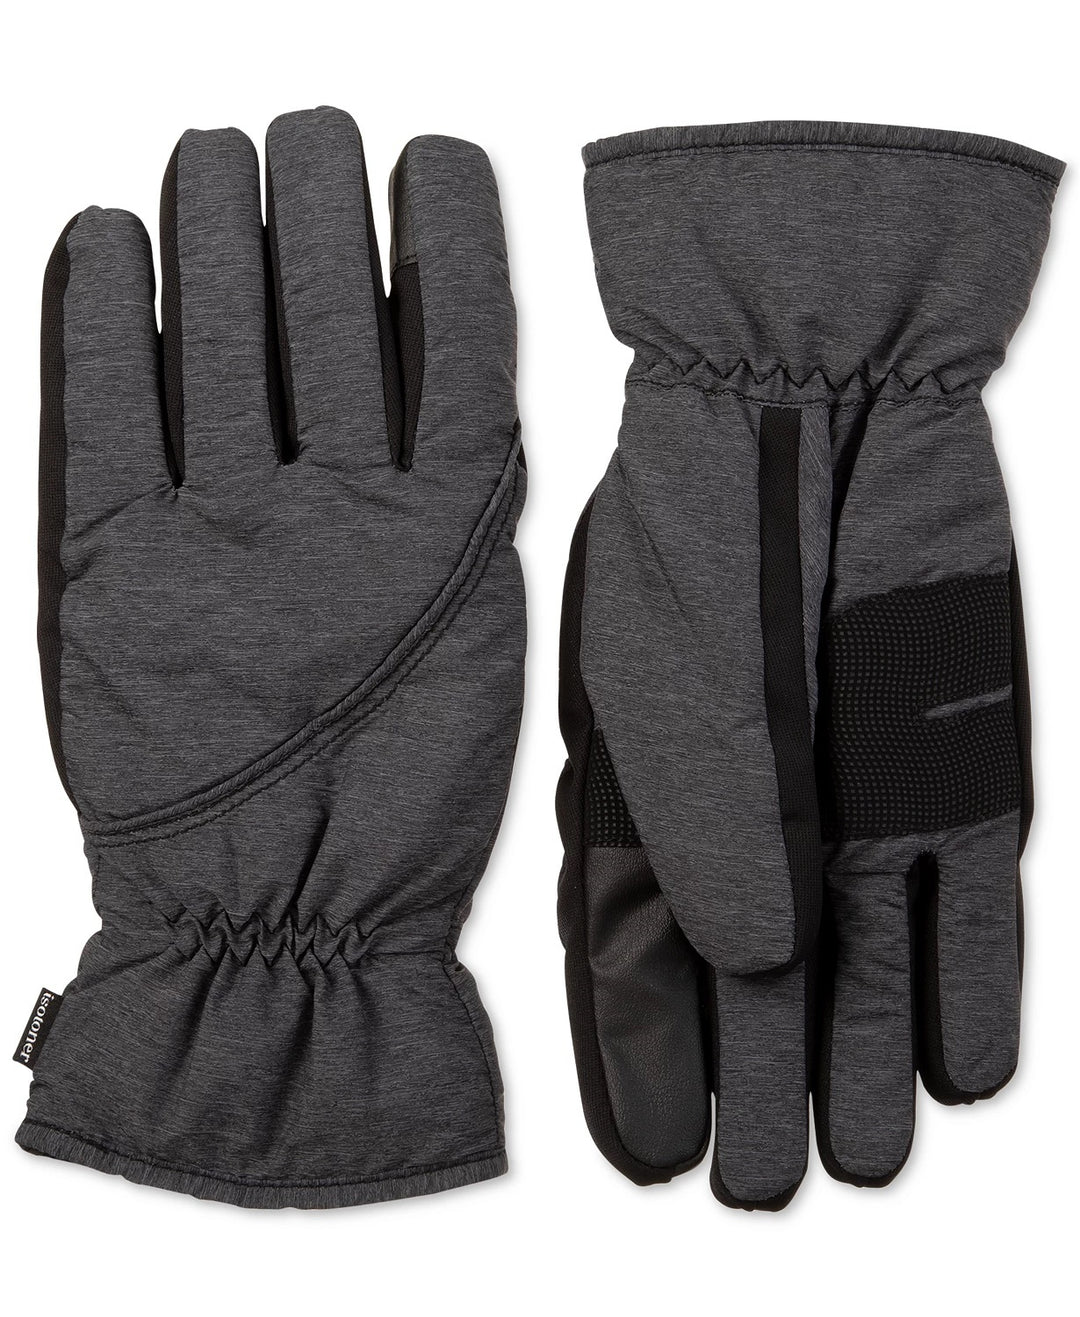 Isotoner Signature Men's Sleek Heat Waterproof Gloves Black Size Large